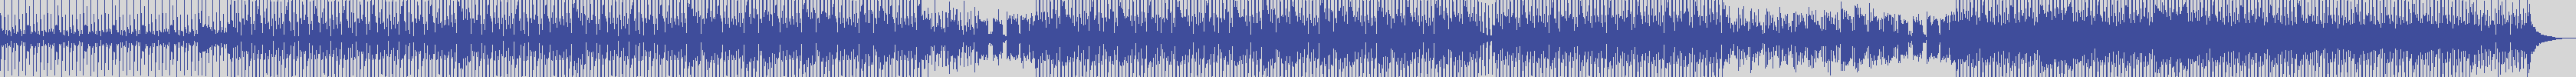 atomic_recordings [AR014] Double Dee - Shining [Andrea T Mendoza Club Mix] audio wave form